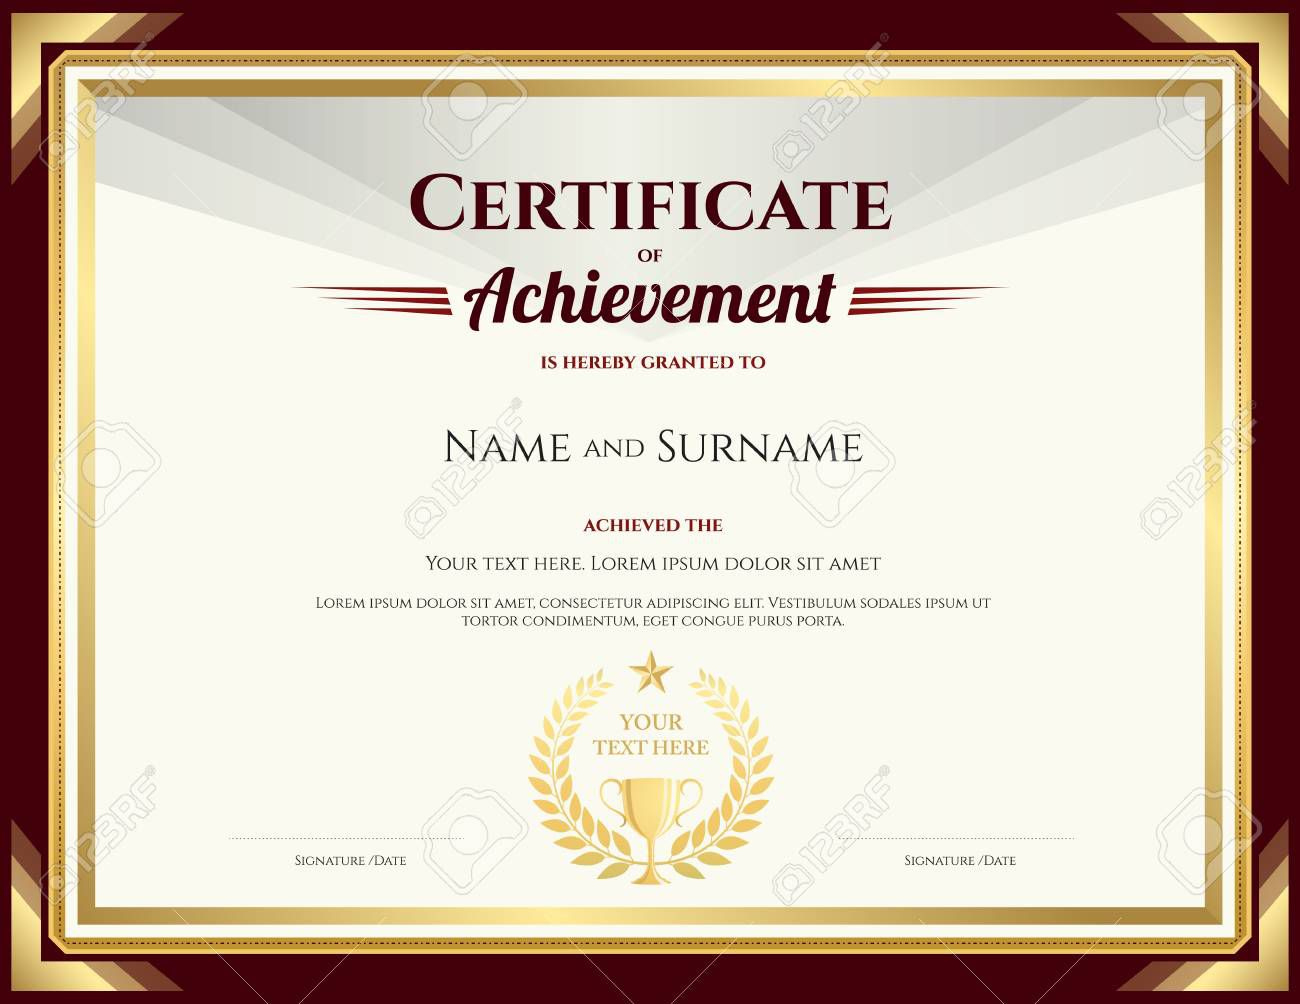 Certificate Of Achievement Template  Addictionary for Free Certificate Of Achievement Template Word